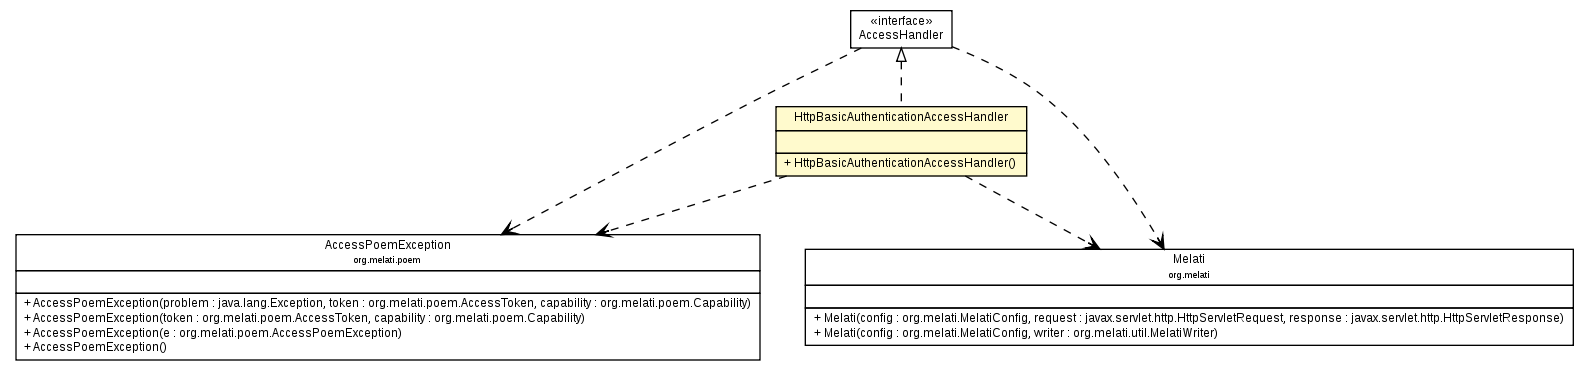 Package class diagram package HttpBasicAuthenticationAccessHandler